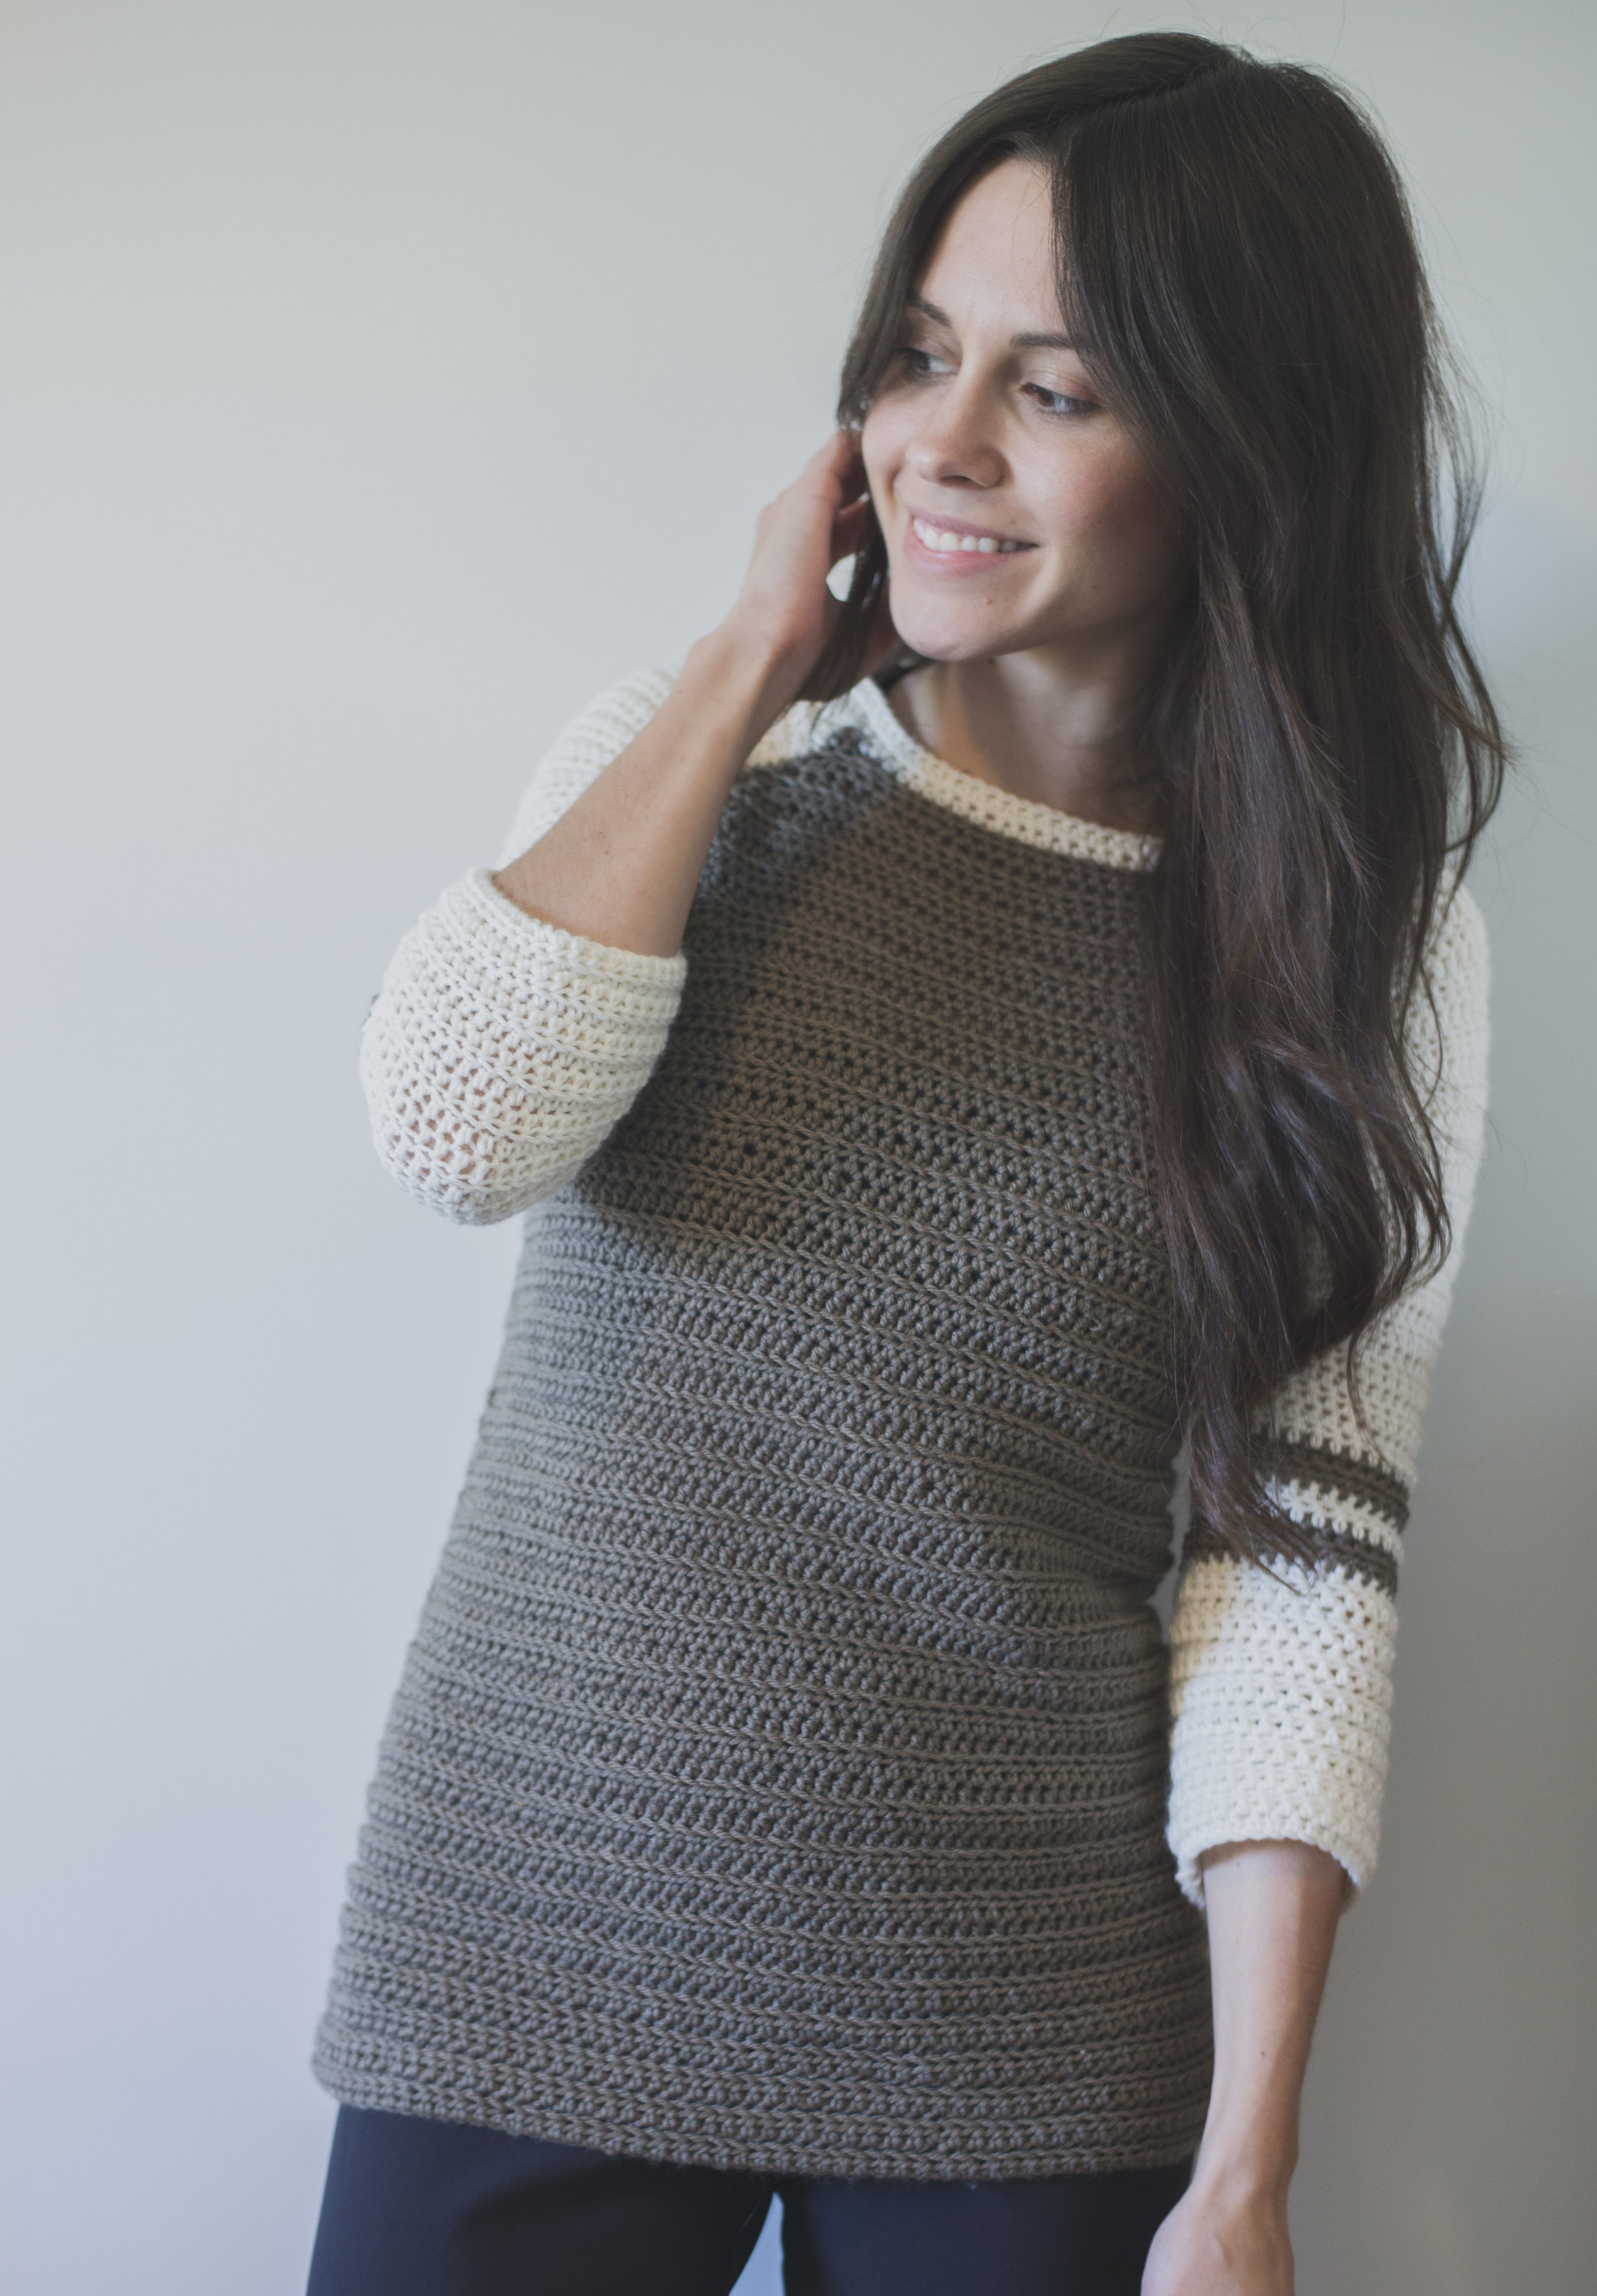 Seasoned Sweater Vest - Free Crochet Pattern — Megmade with Love